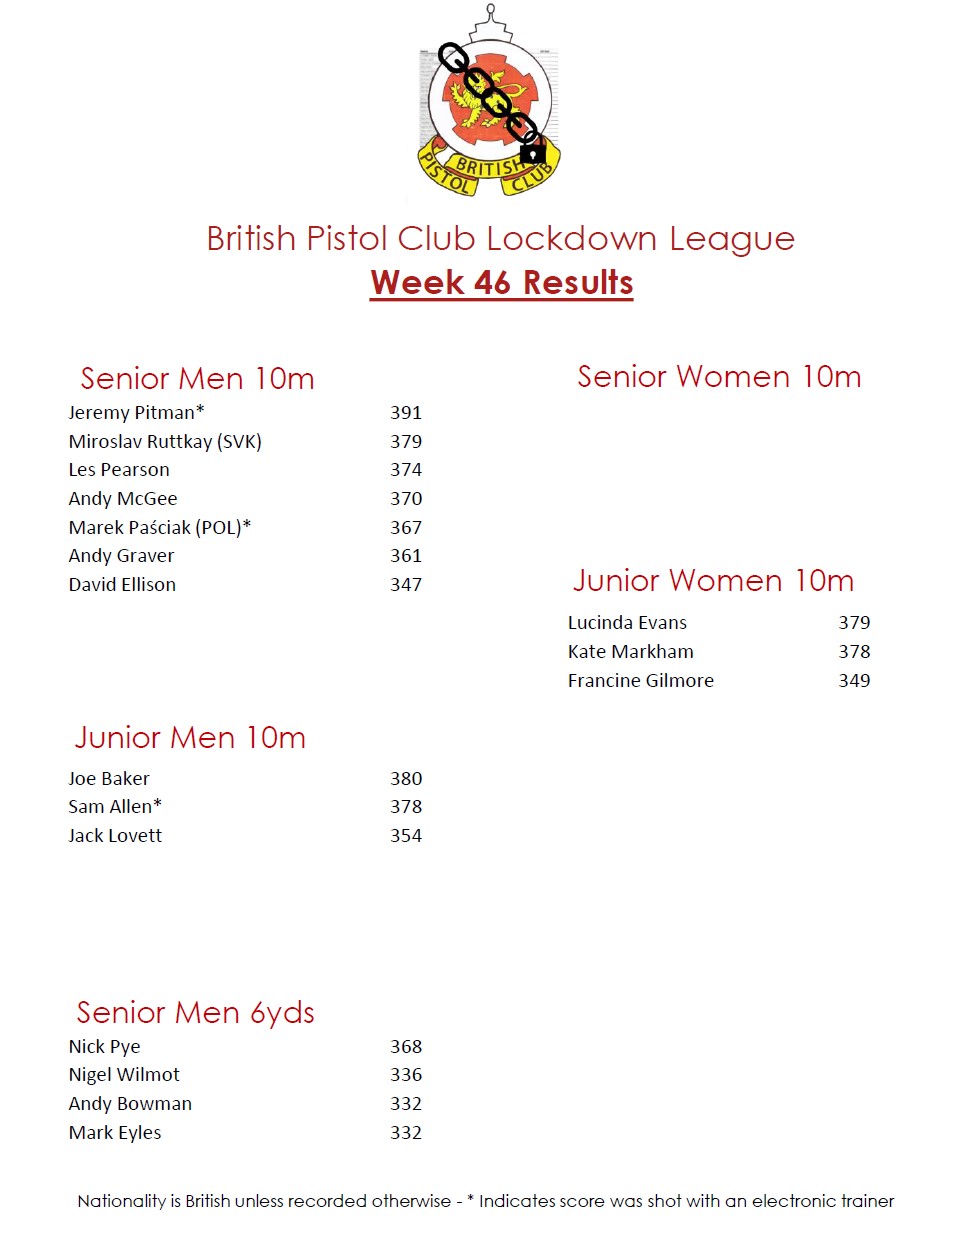 BPC Lockdown League Week 46 Results